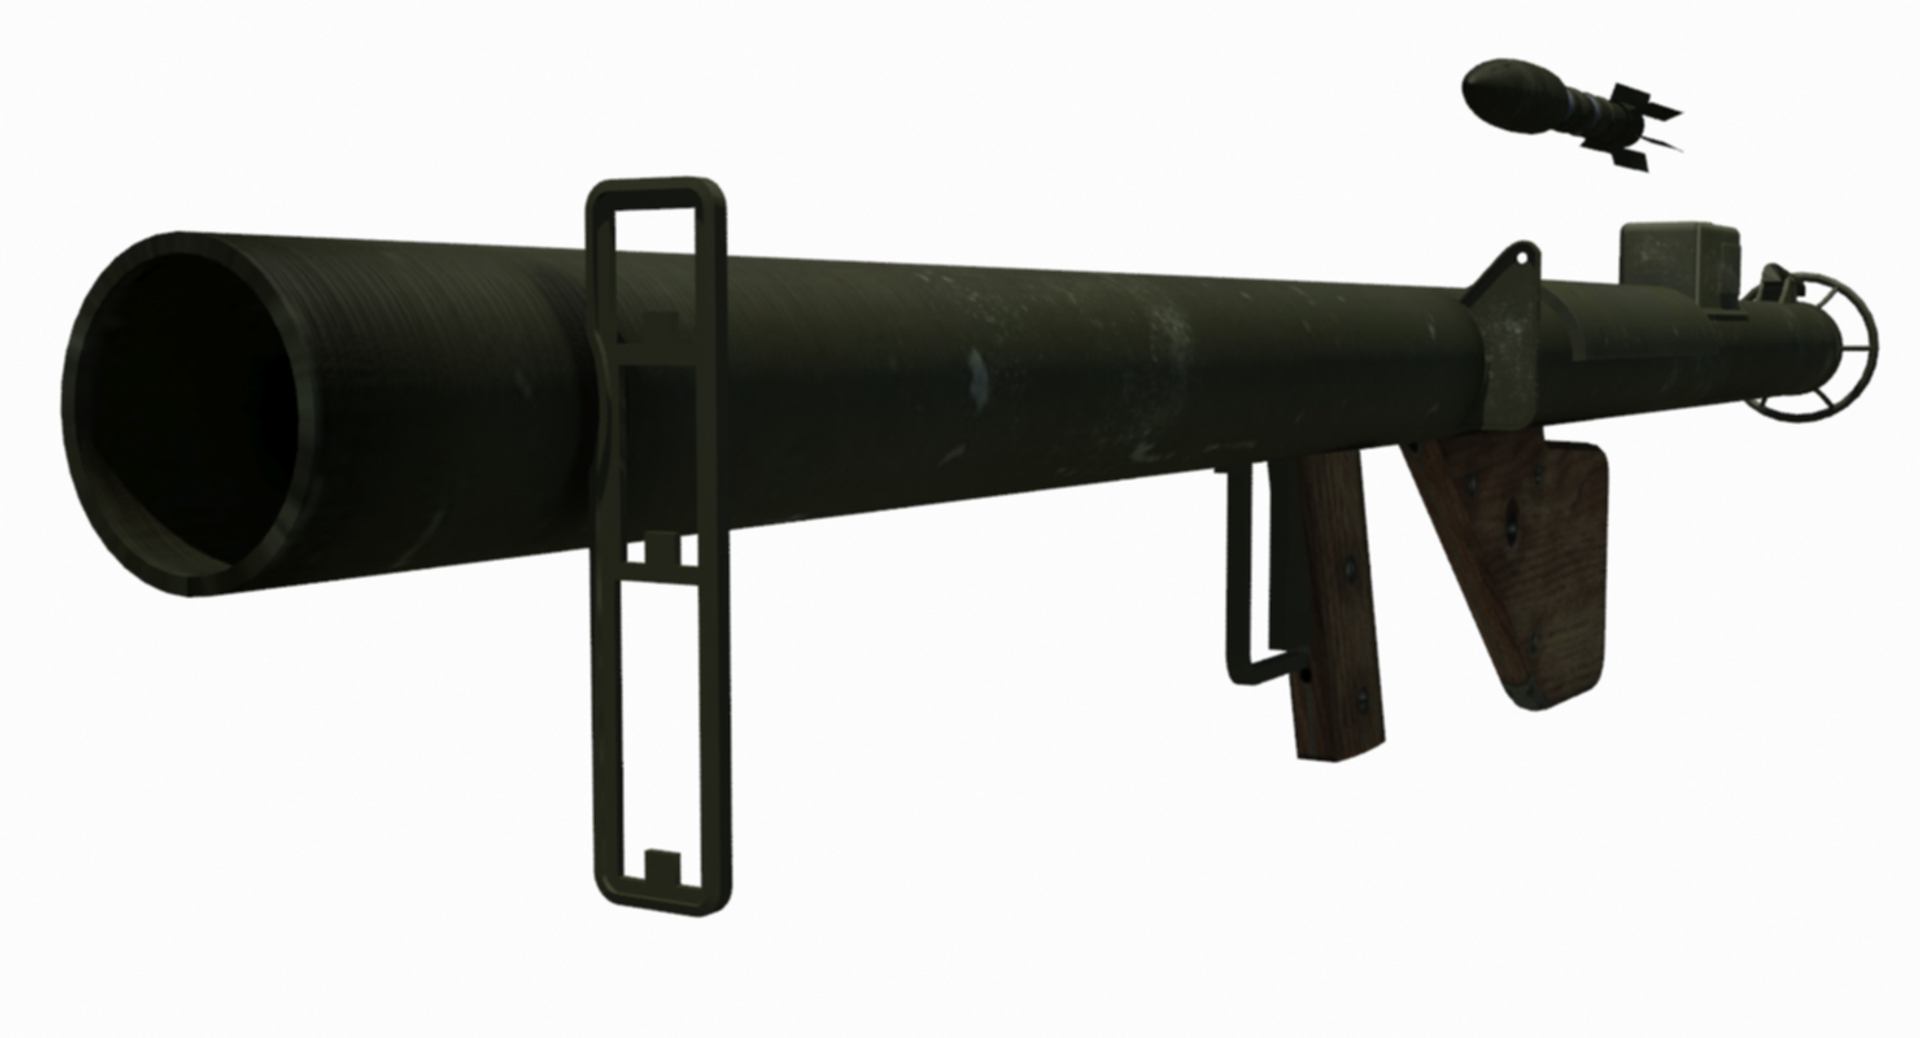 Bella bazooka. М1а1 базука. M1 Bazooka. M 341 базука. Гранатомёт m1 Bazooka.